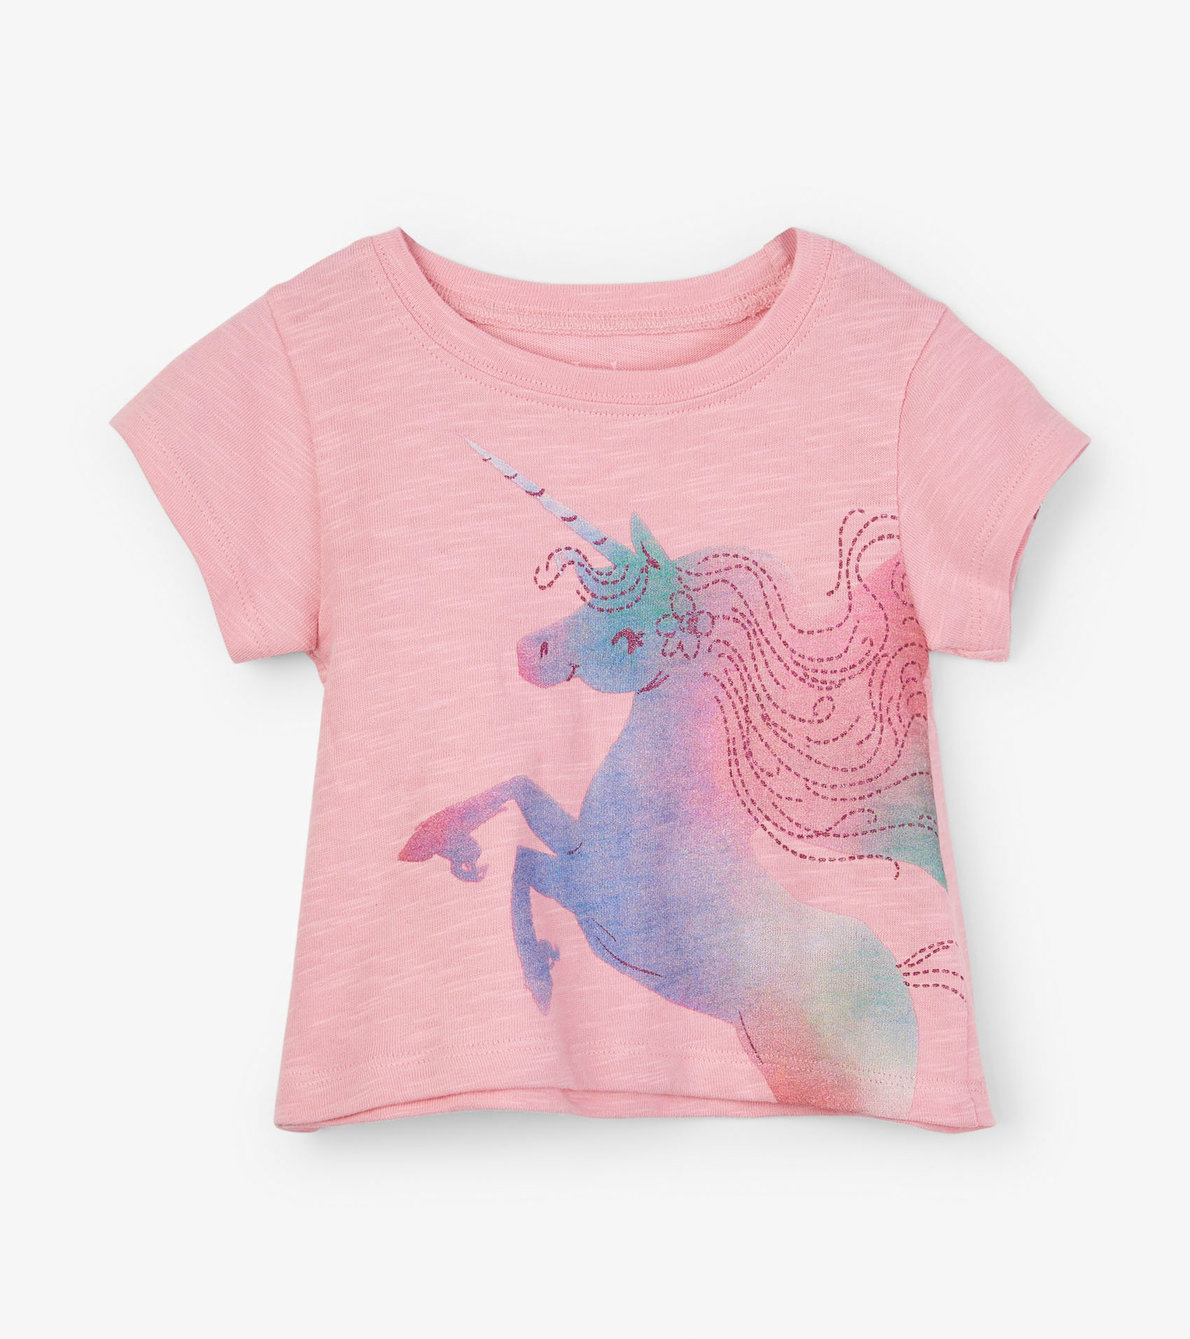 View larger image of Rainbow Unicorn Baby Tee